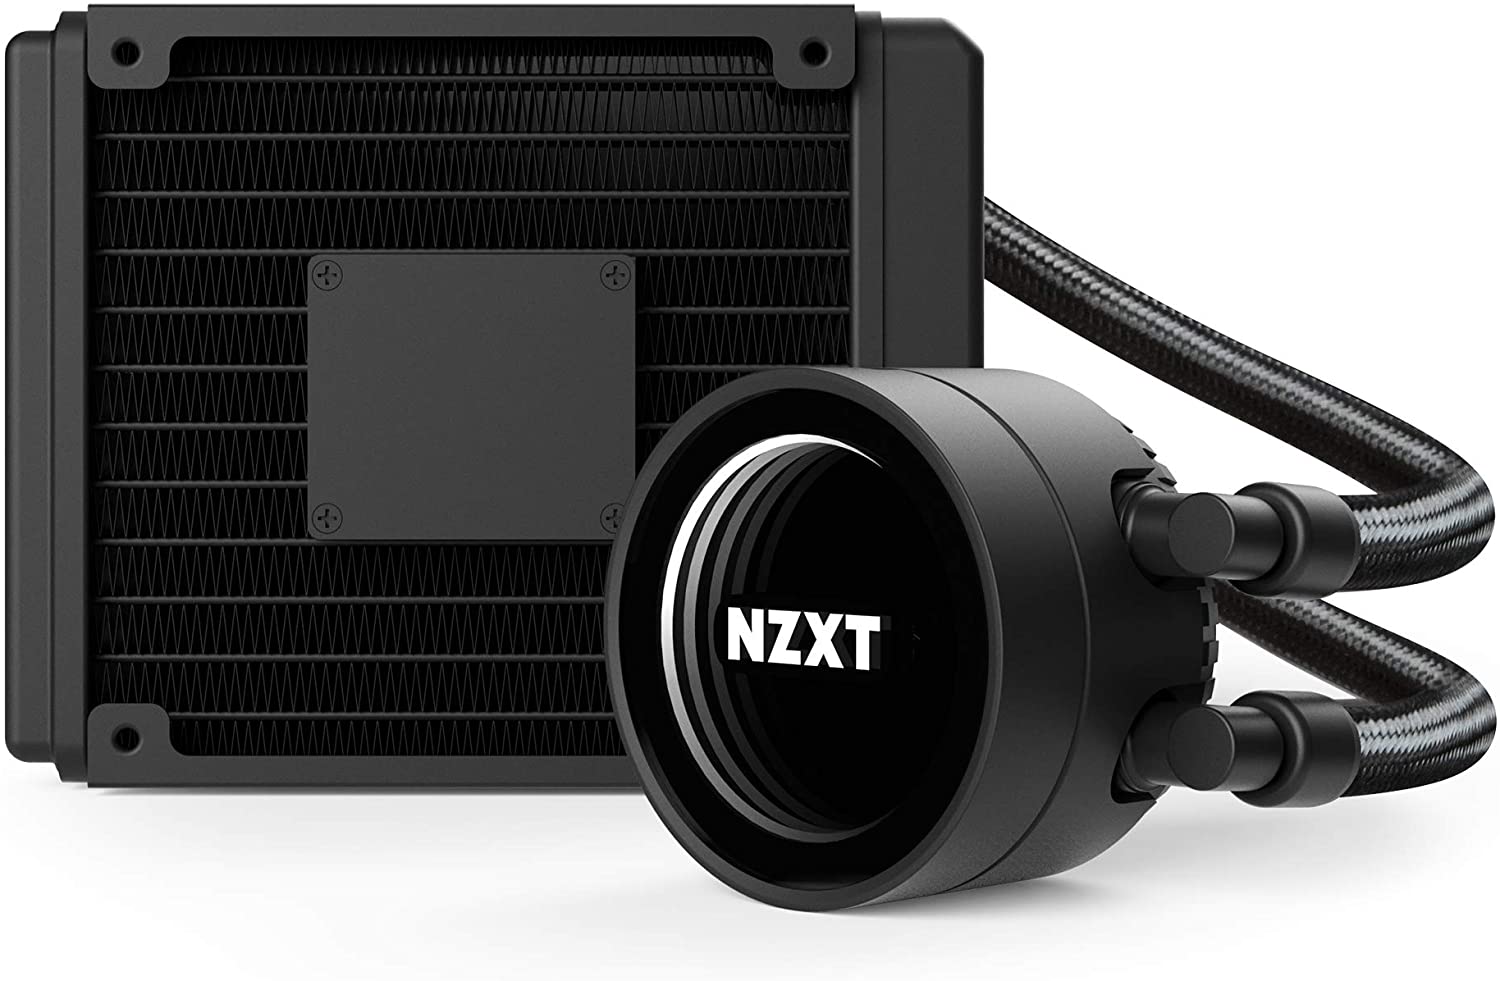 NZXT Kraken M22 120mm - RL-KRM22-01 - AIO RGB CPU Liquid Cooler - CAM-Powered - Infinity Mirror Design - Reinforced Extended Tubing - AER P120mm PWM...